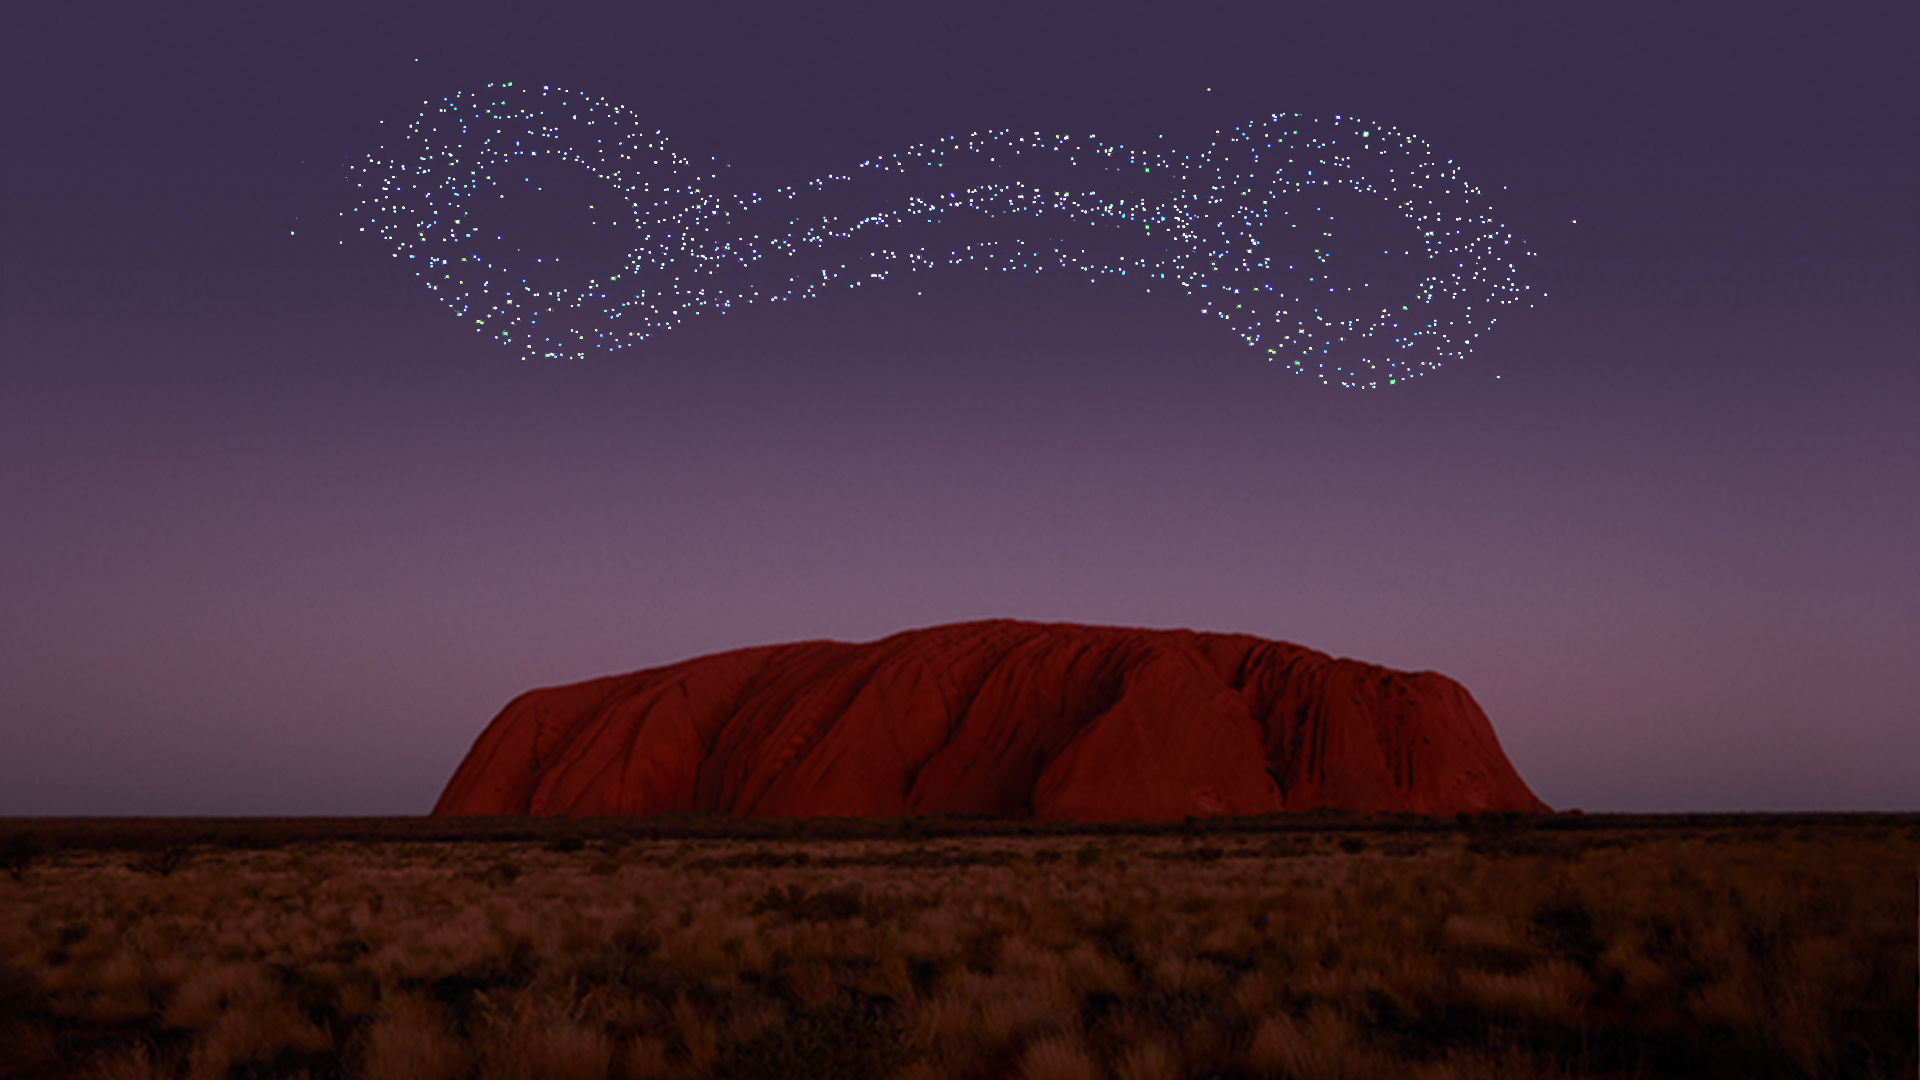 Wintjii Wiru Experience, Uluru © Voyages Indigenous Tourism Australia, NT 